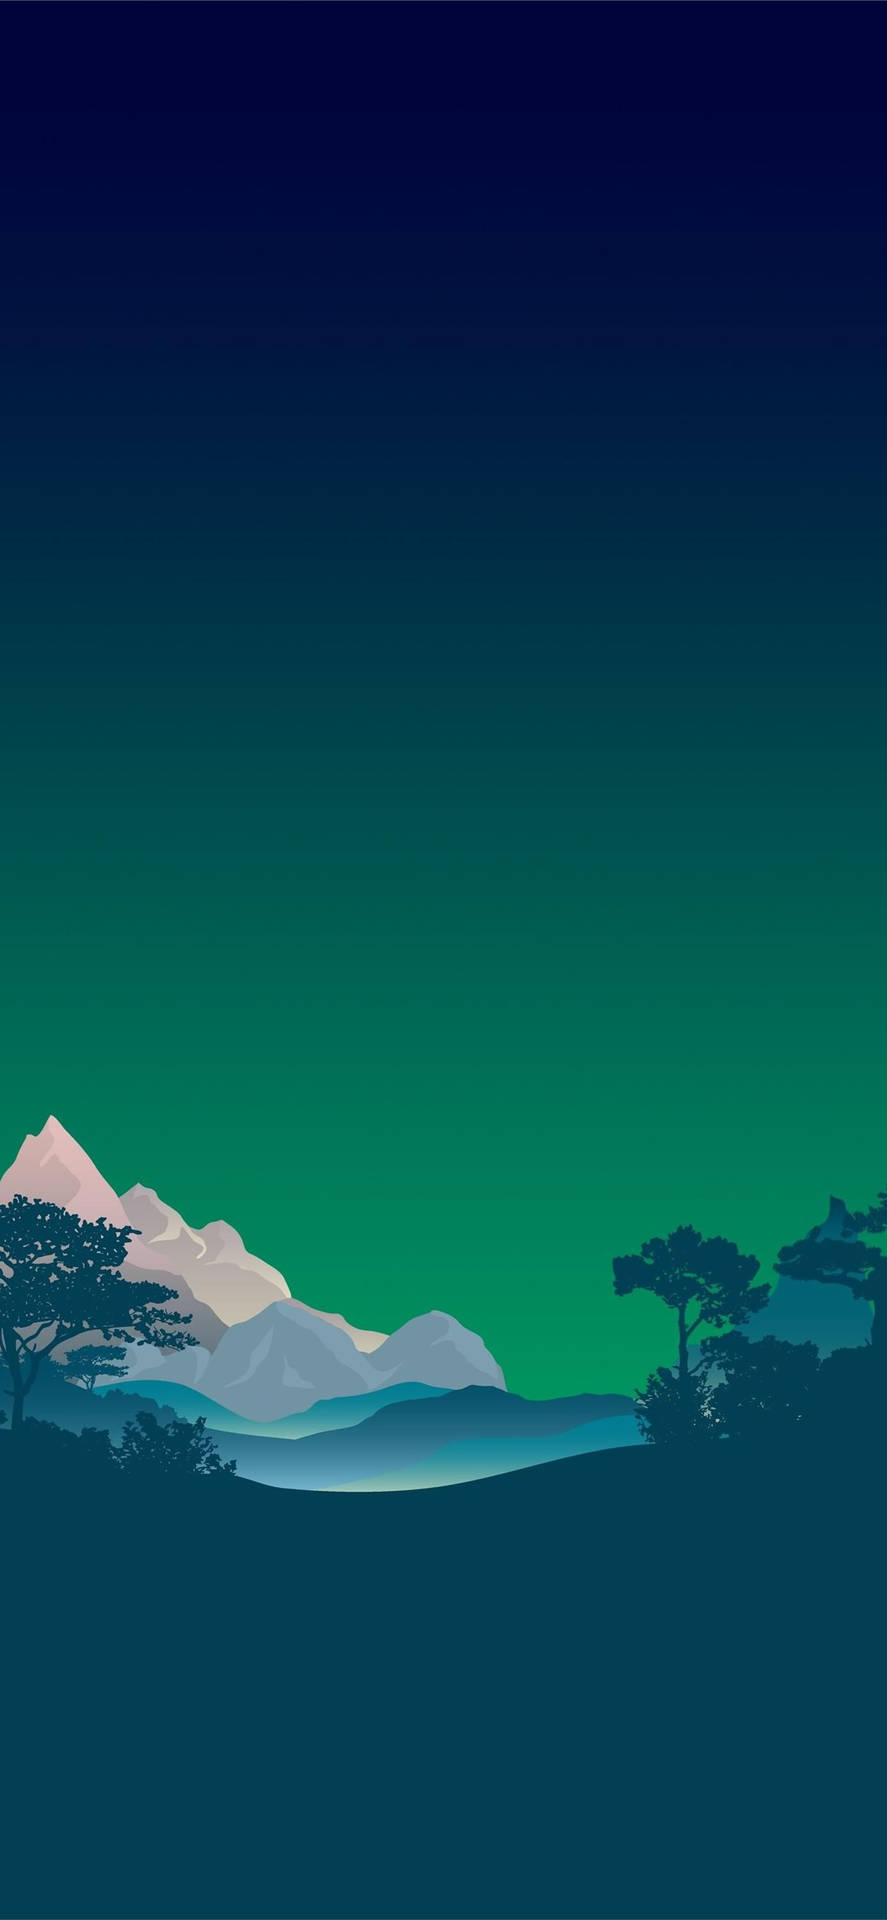 Caption: Stunning Snowy Mountain Green iPhone Wallpaper Wallpaper